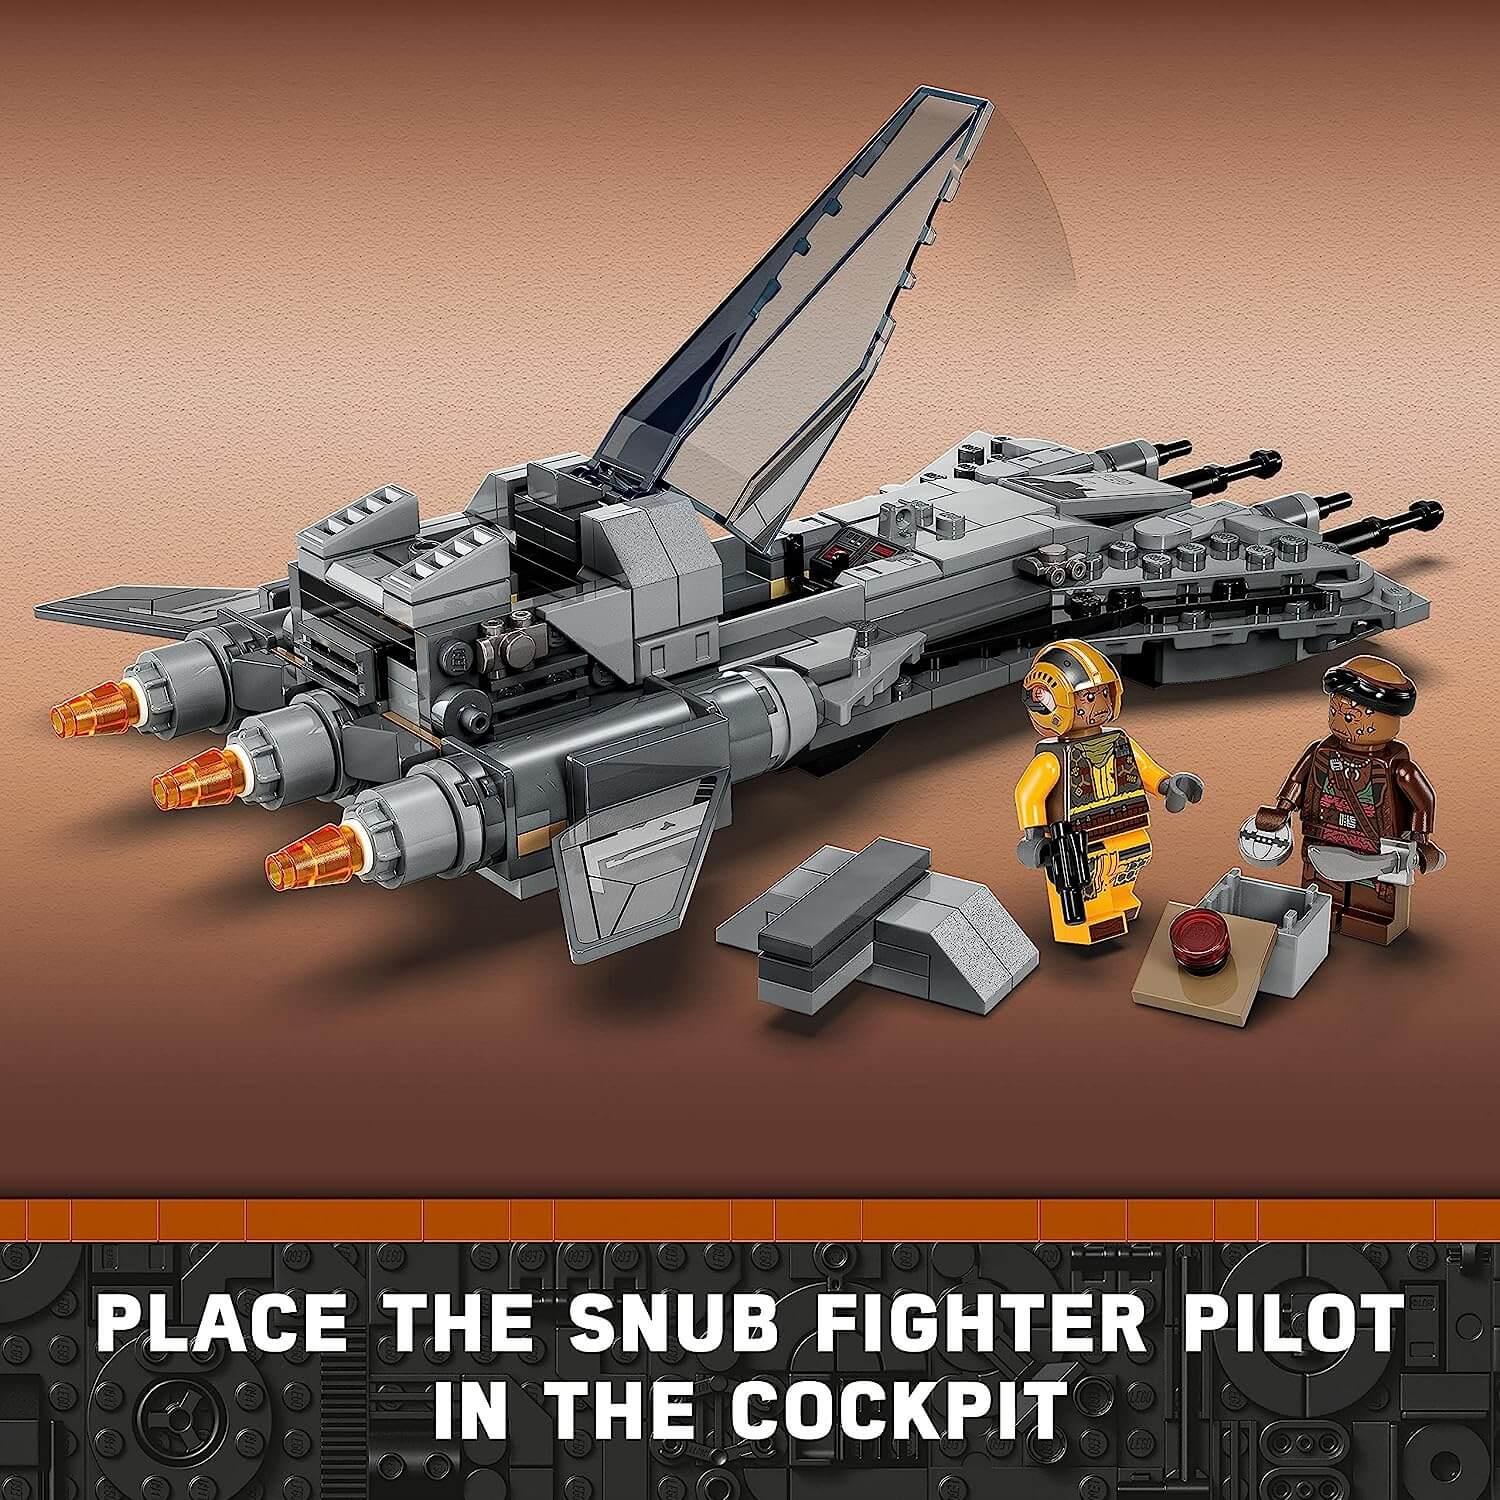 Lego Star Wars 75346 Pirate Snub Fighter Set